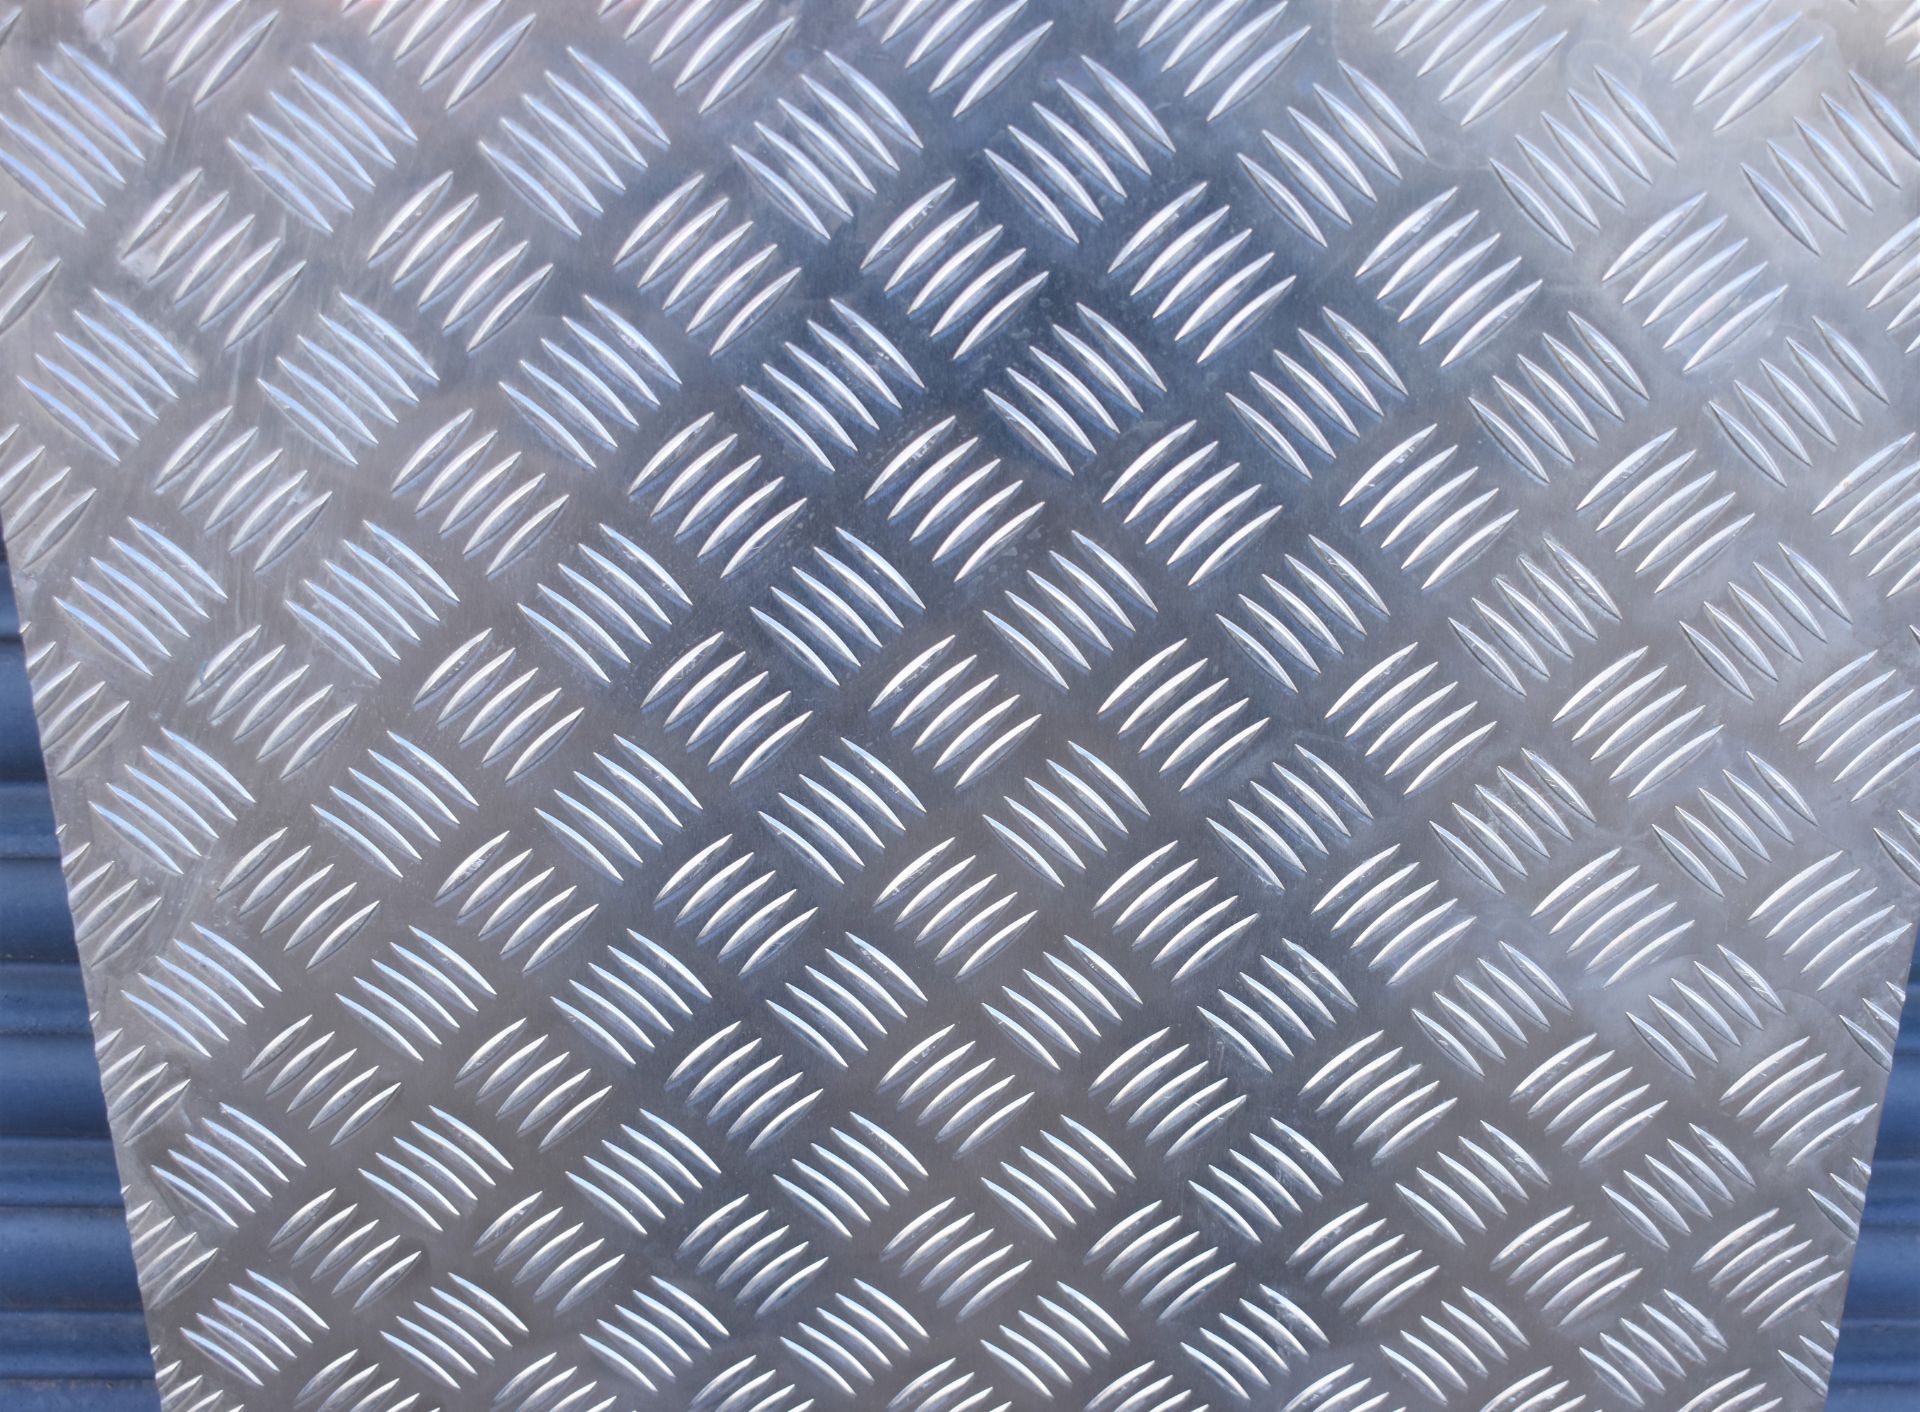 4 x Aluminium Tread Checker Plates - Size 125 x 50.5 x 0.3 cms - None Slip Floor Plate Suitable - Image 2 of 4